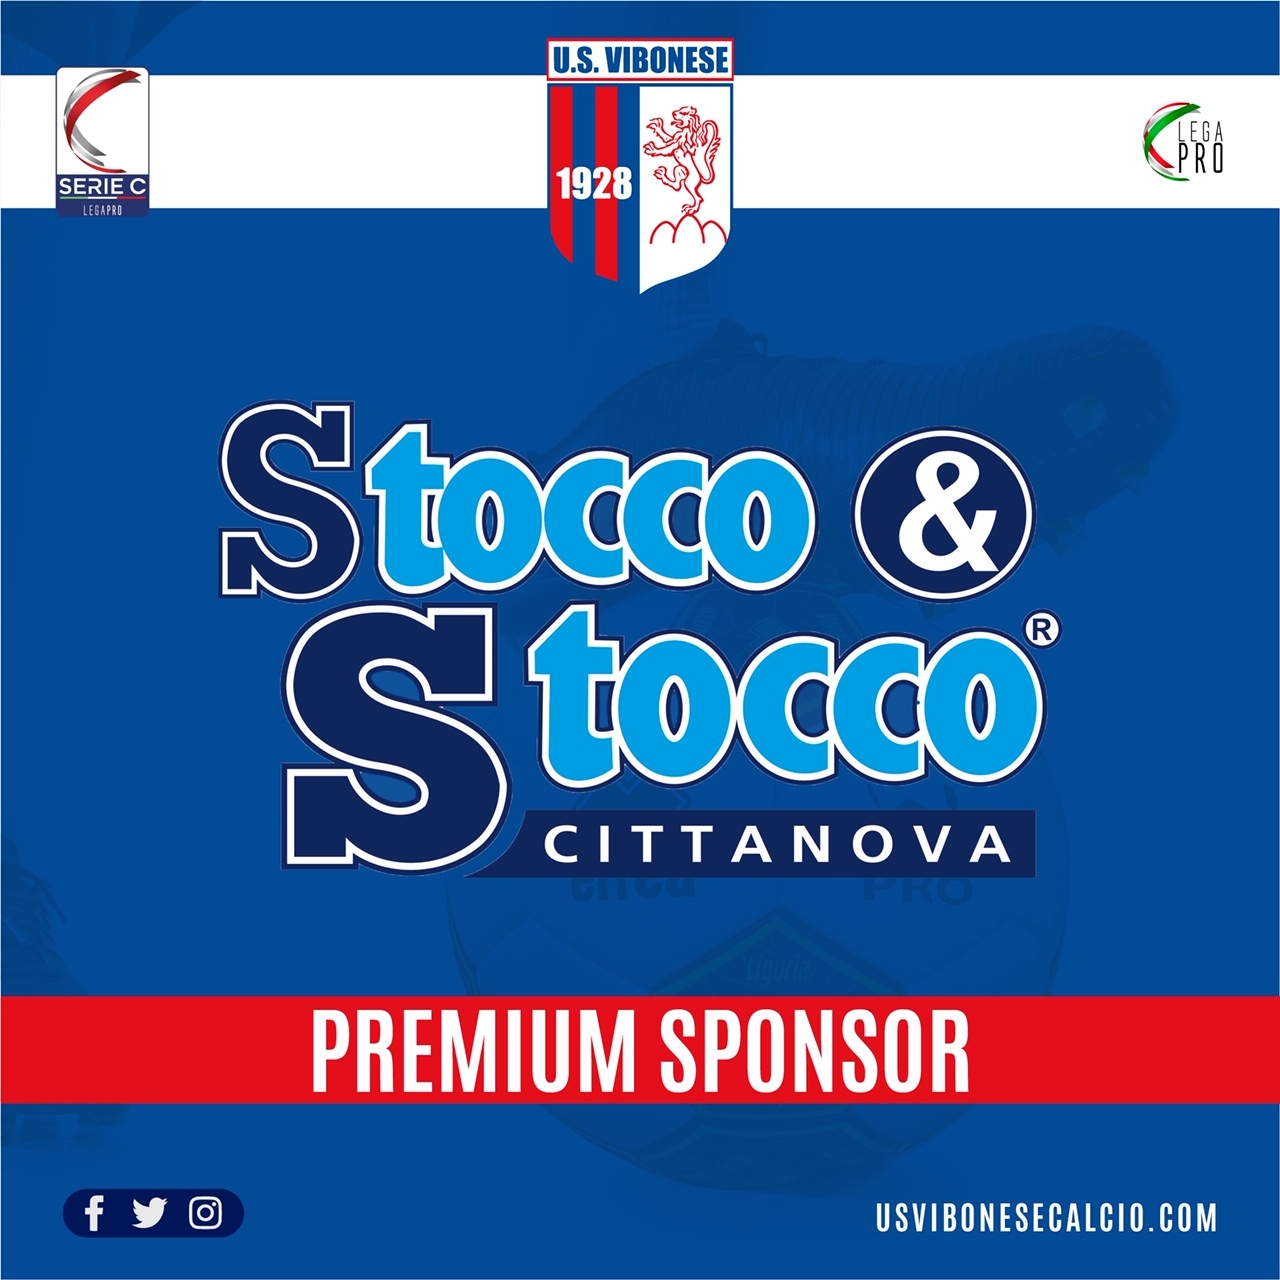 Stocco & Stocco sponsor Vibonese